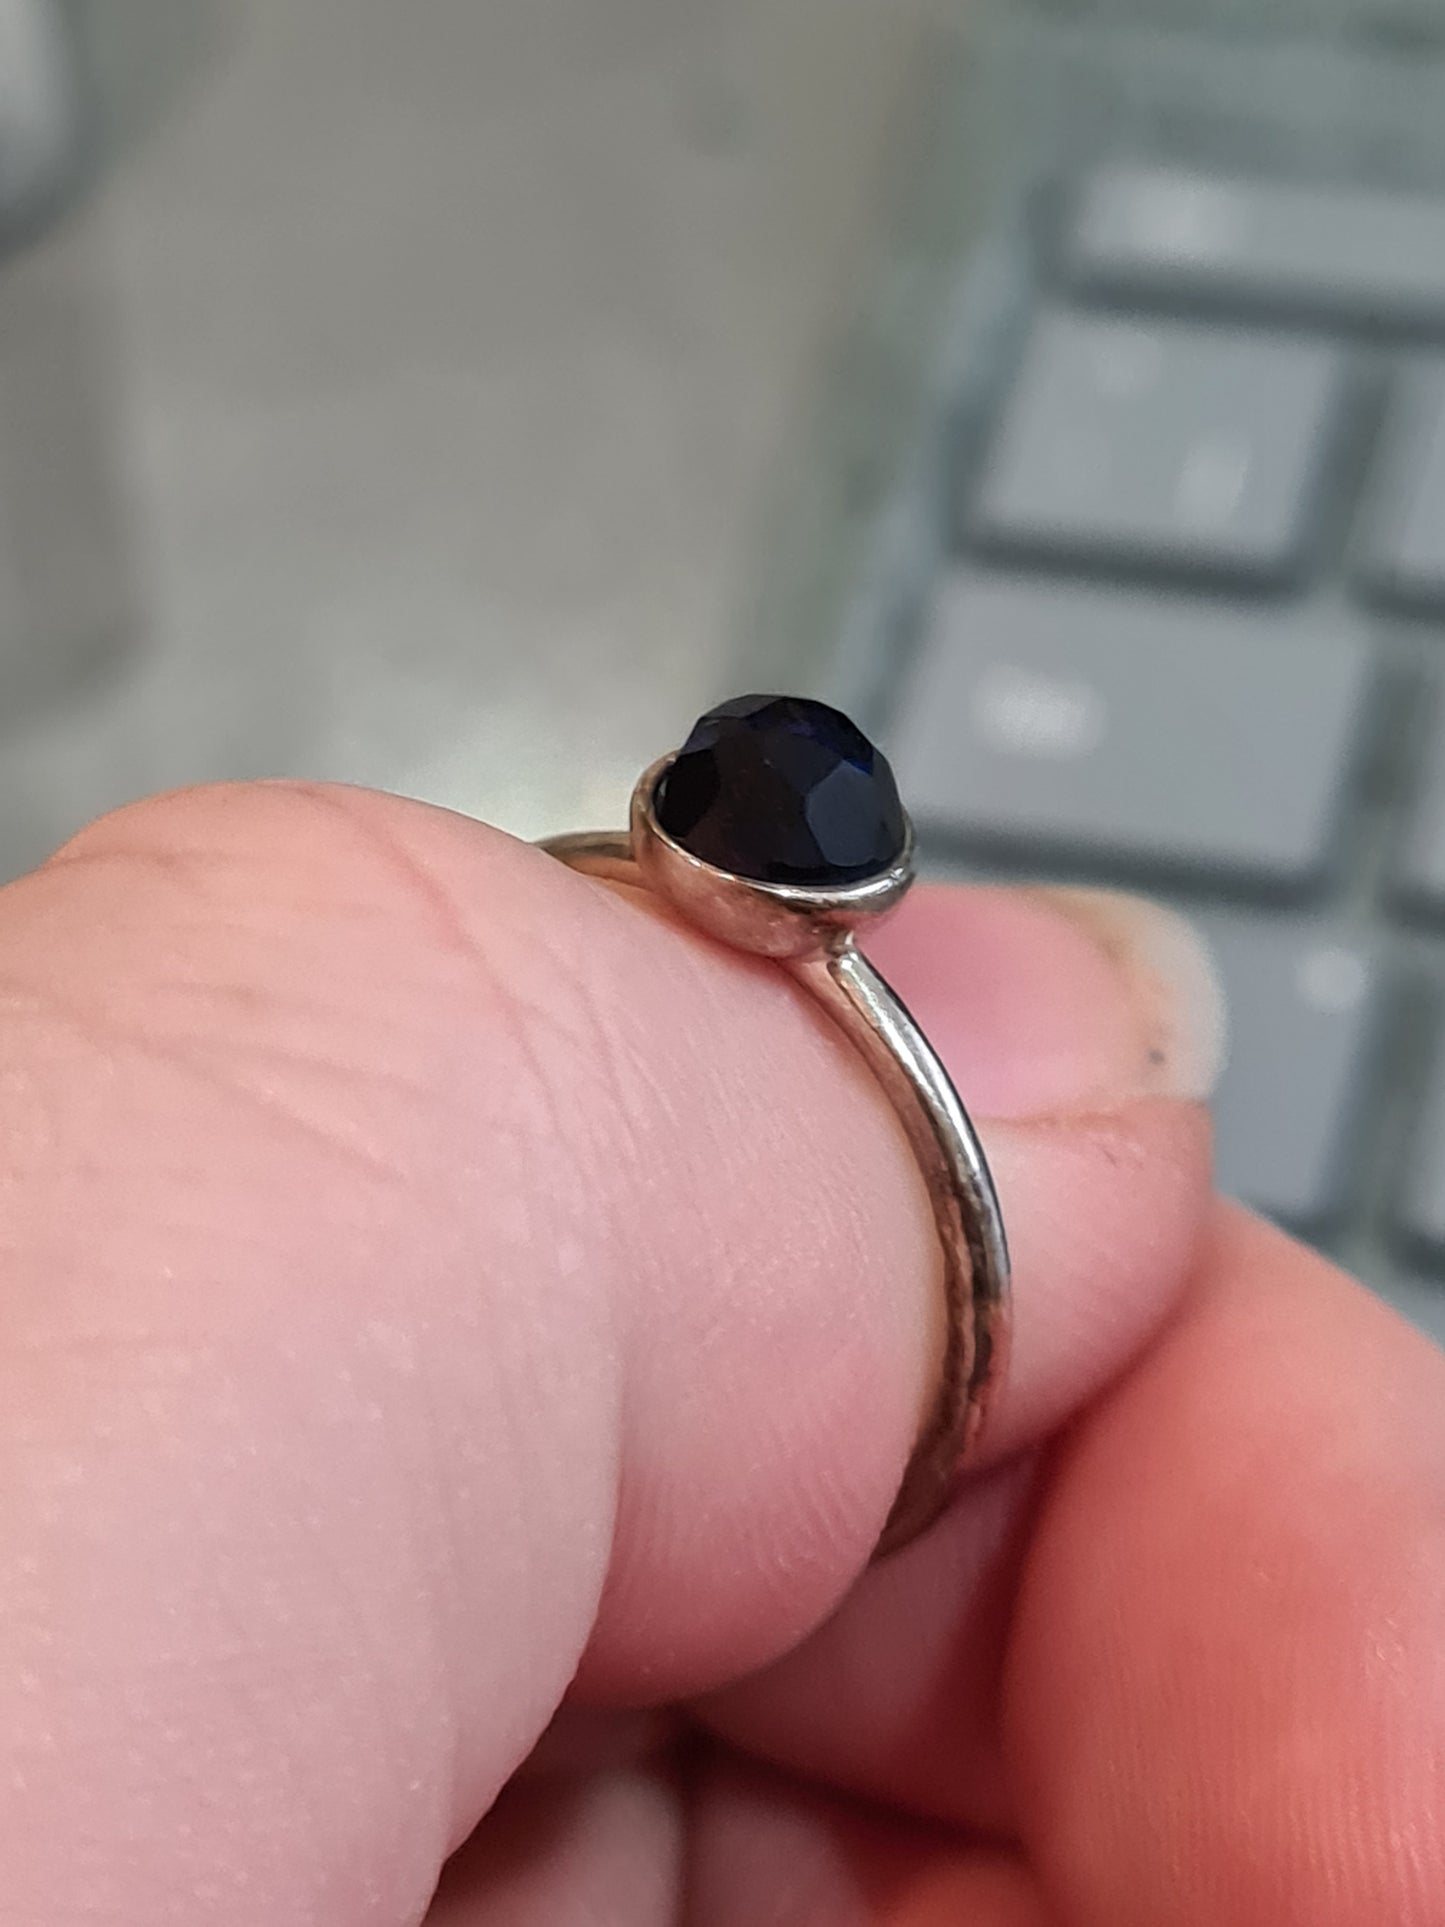 Genuine Pandora Dark Blue September Birthstone Ring